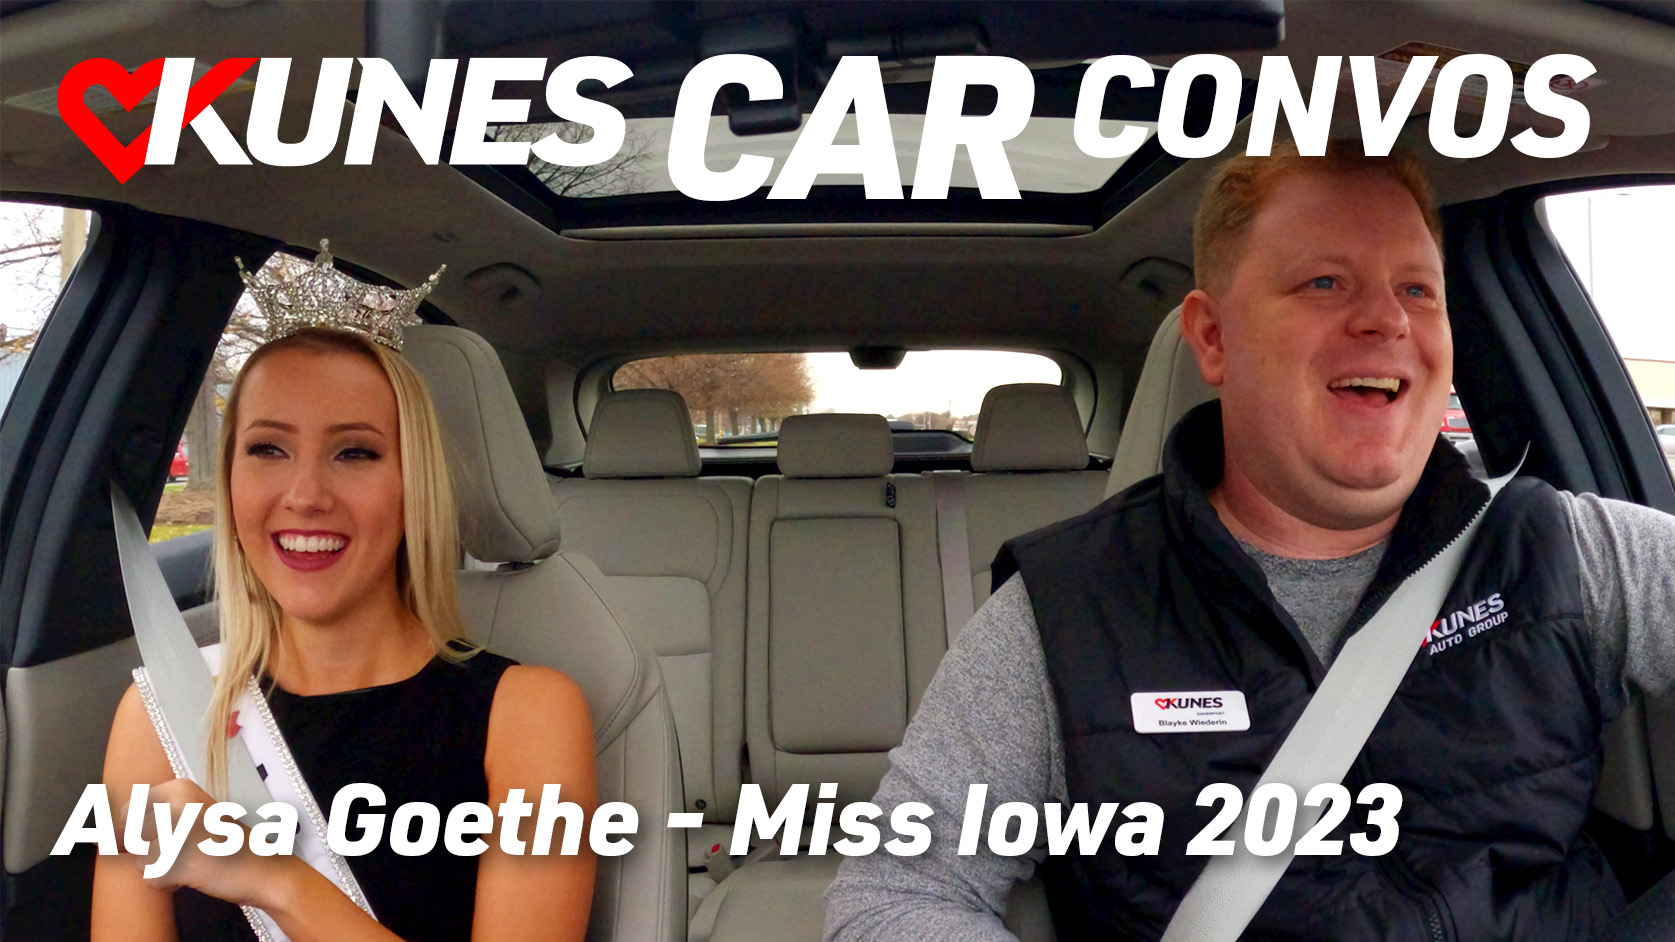 Kunes Car Convos Alysa Goethe - Miss Iowa 2023